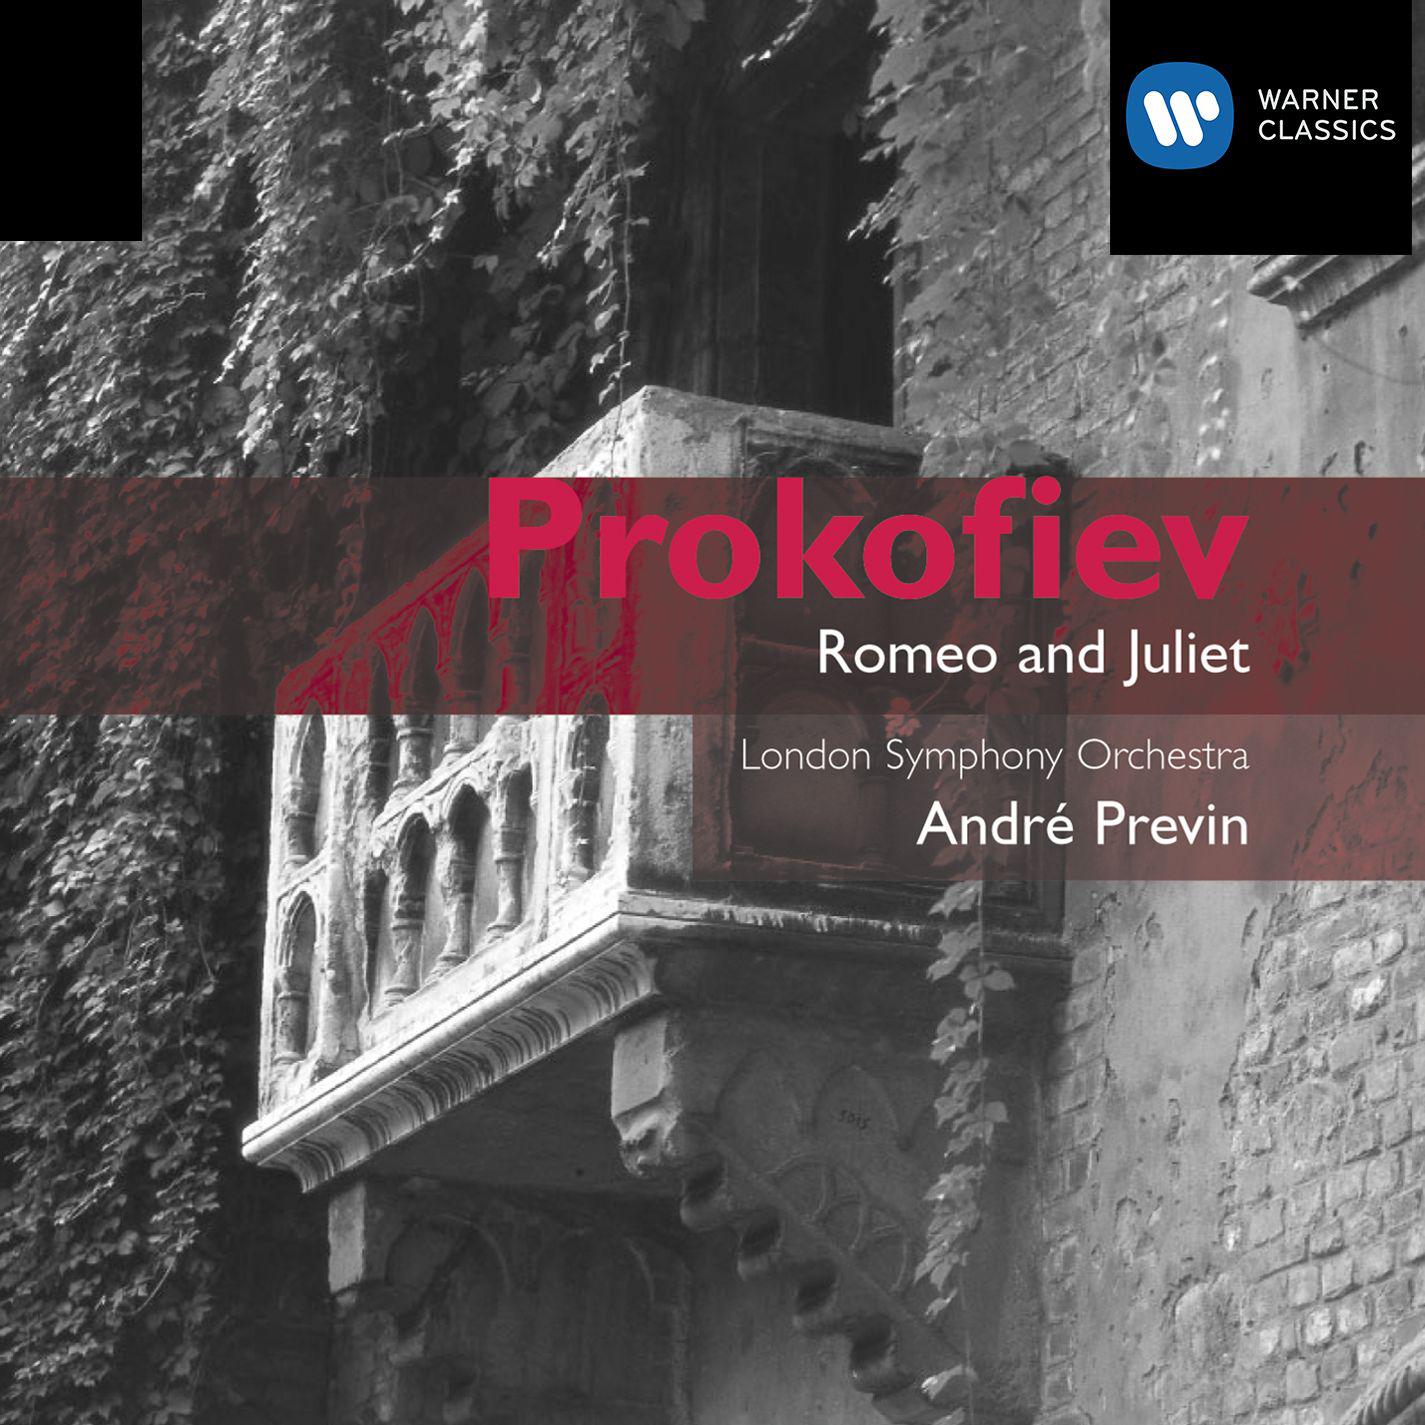 Romeo and Juliet (Complete Ballet), Op. 64, Act 3:No. 48, Morning Serenade